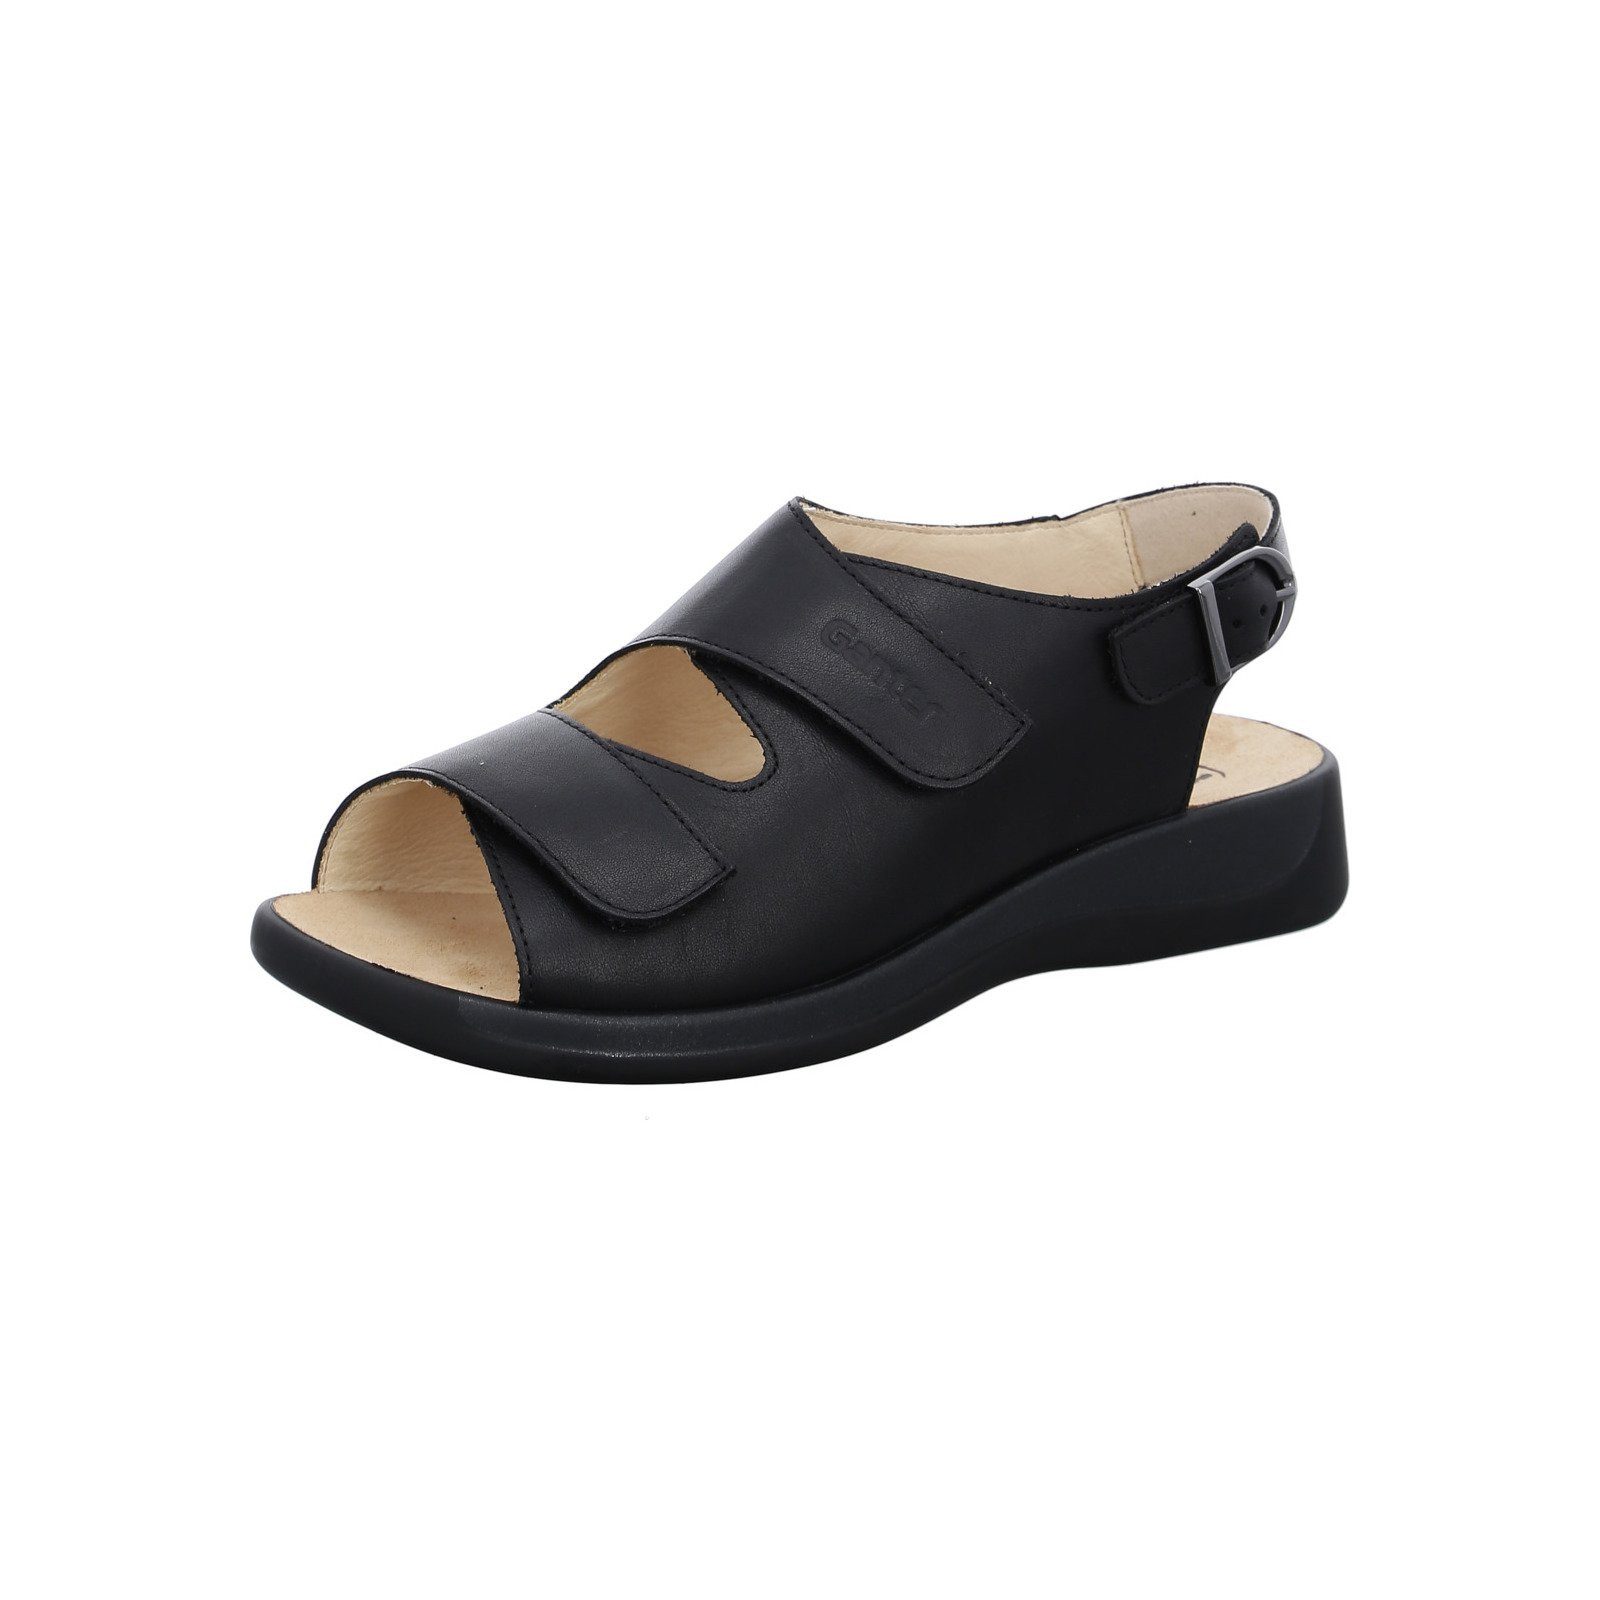 Ganter Monica - Damen Schuhe Sandalette schwarz